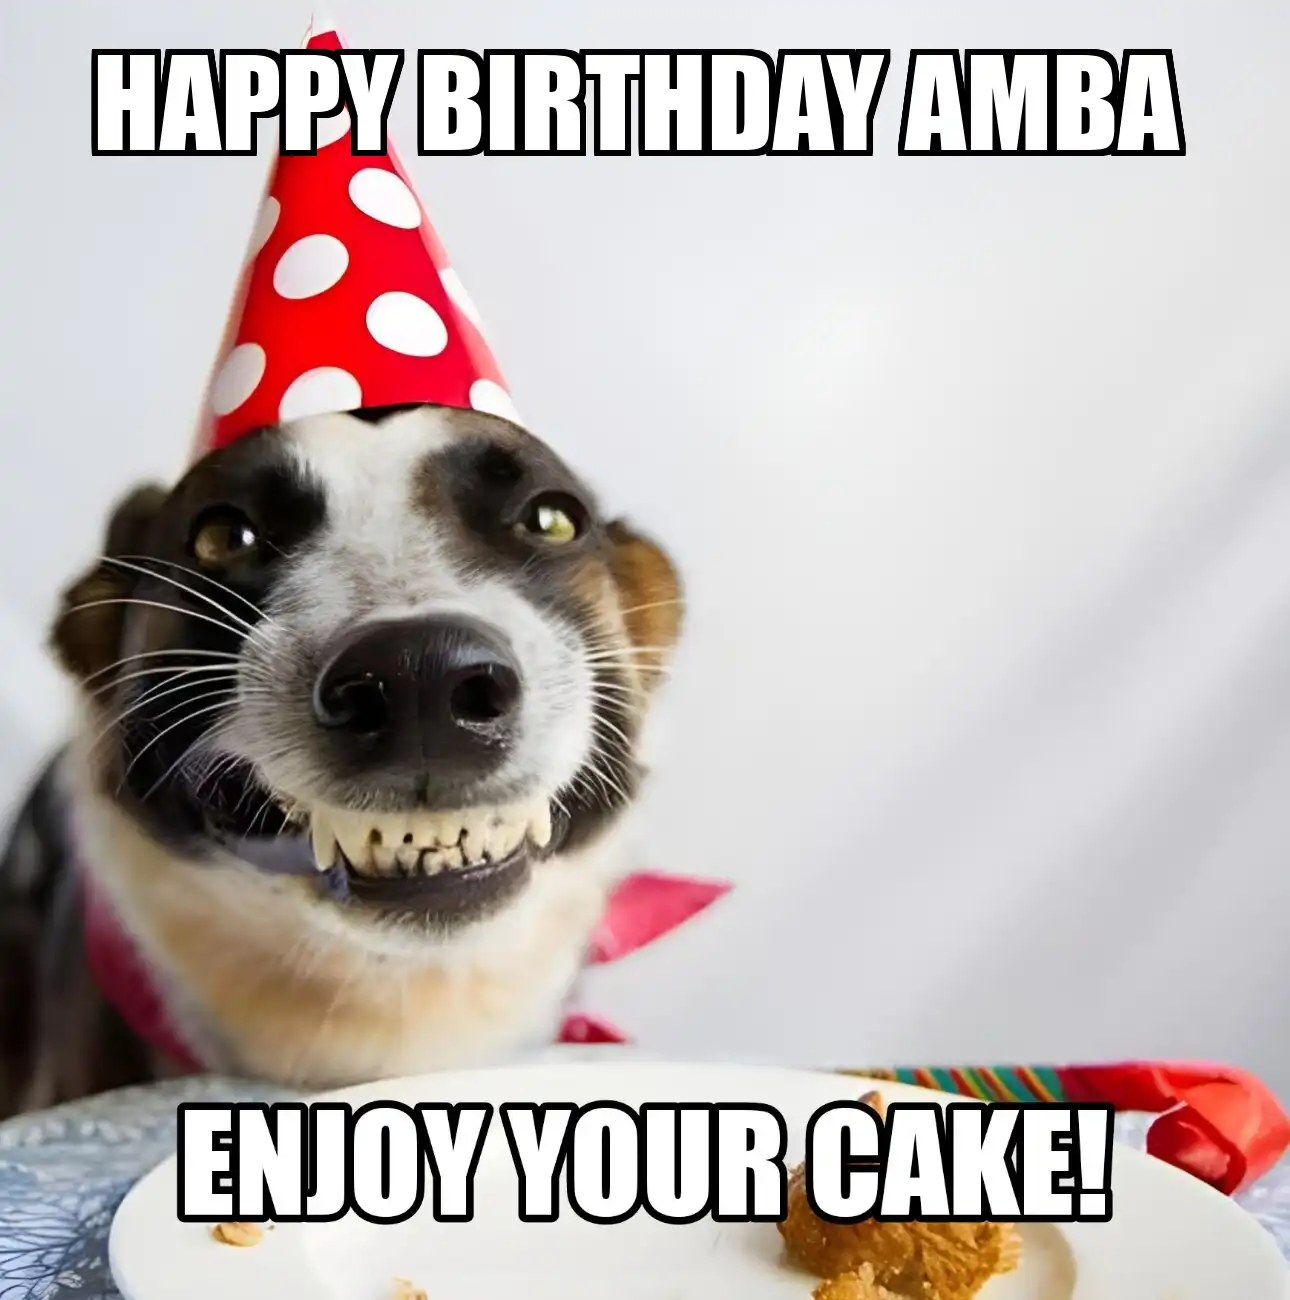 Happy Birthday Amba Enjoy Your Cake Dog Meme